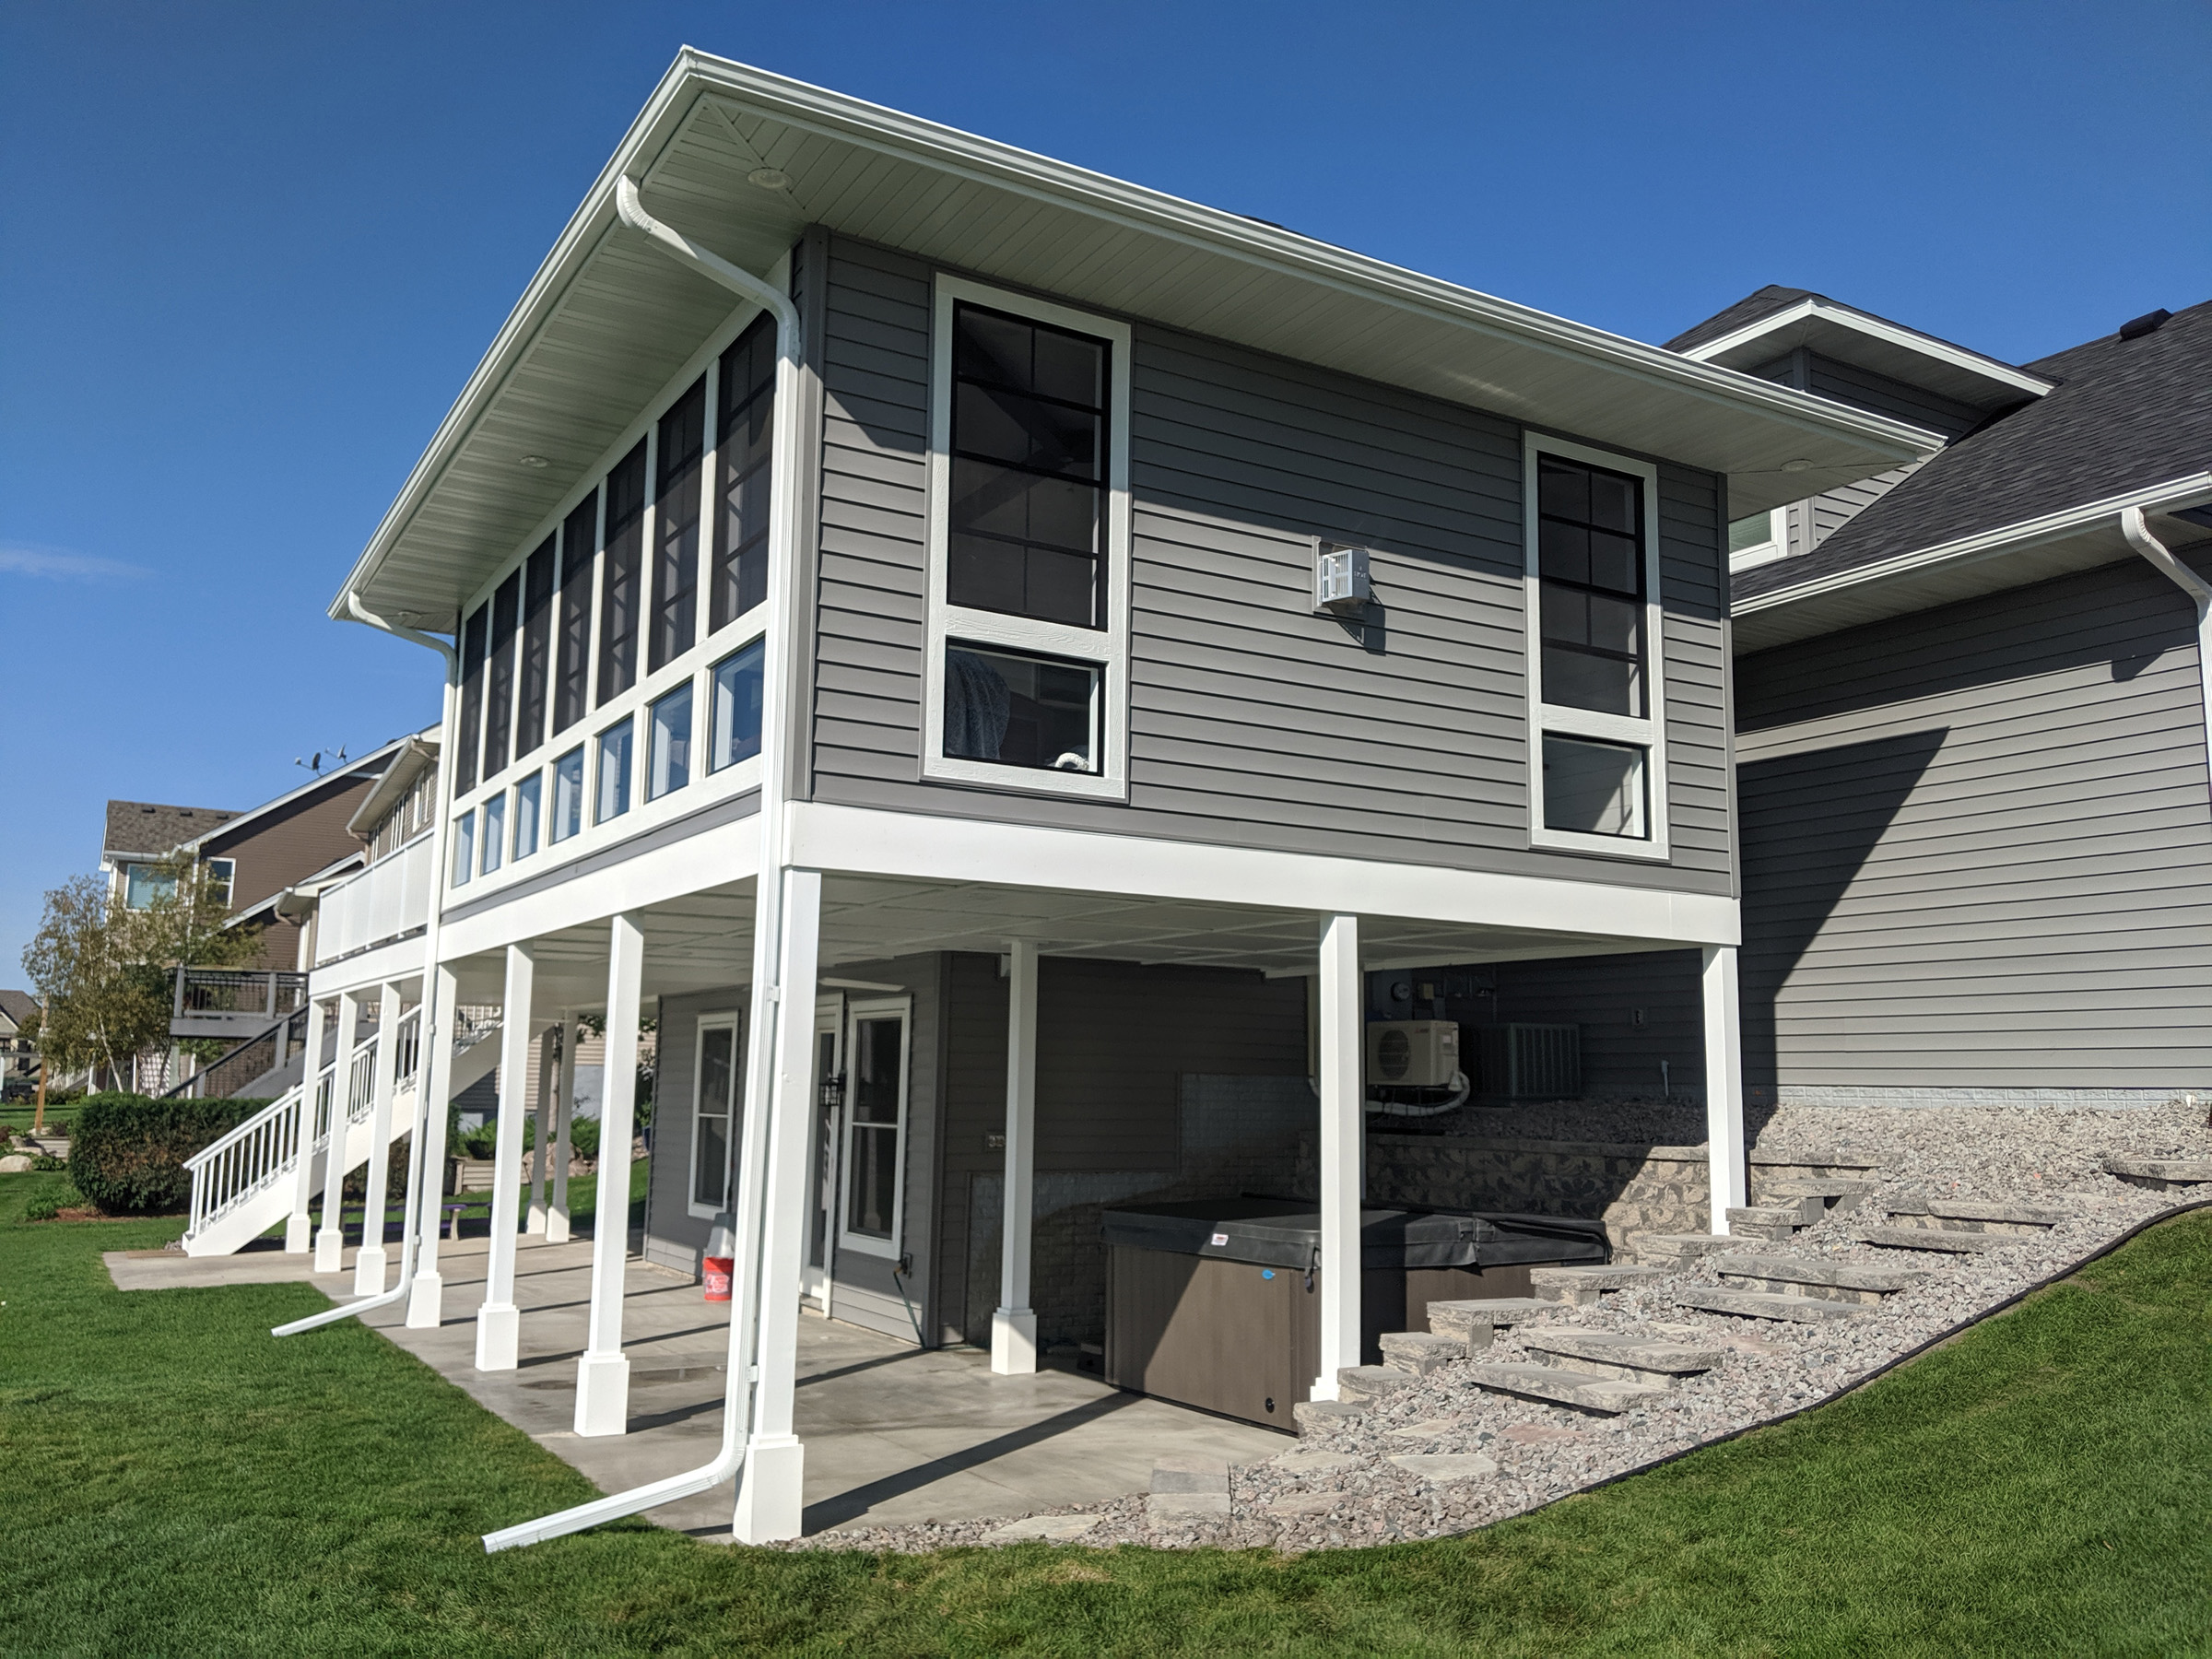 324 sq. ft. 3-season porch addition